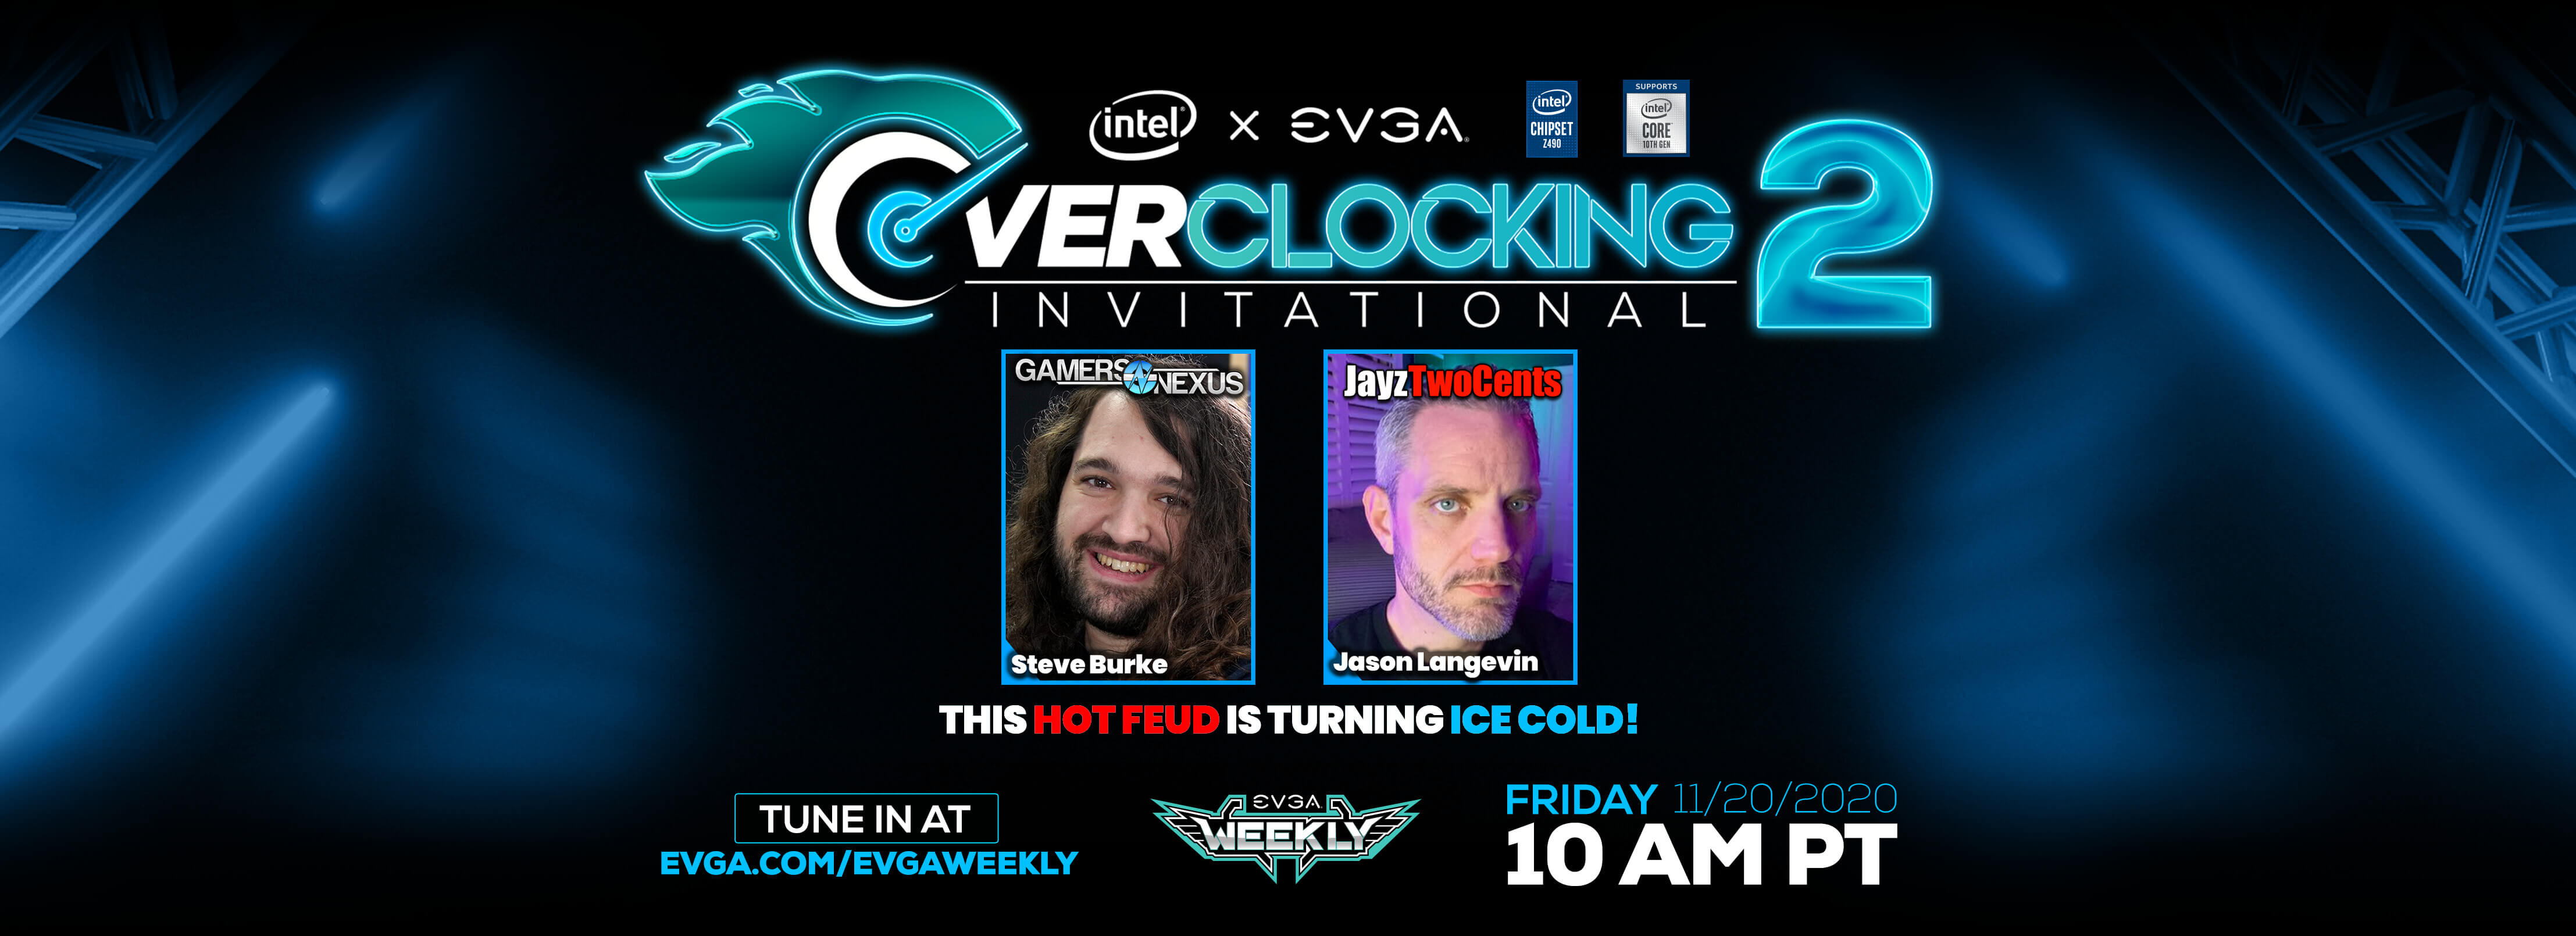 Intel x EVGA Overclocking invitational 2